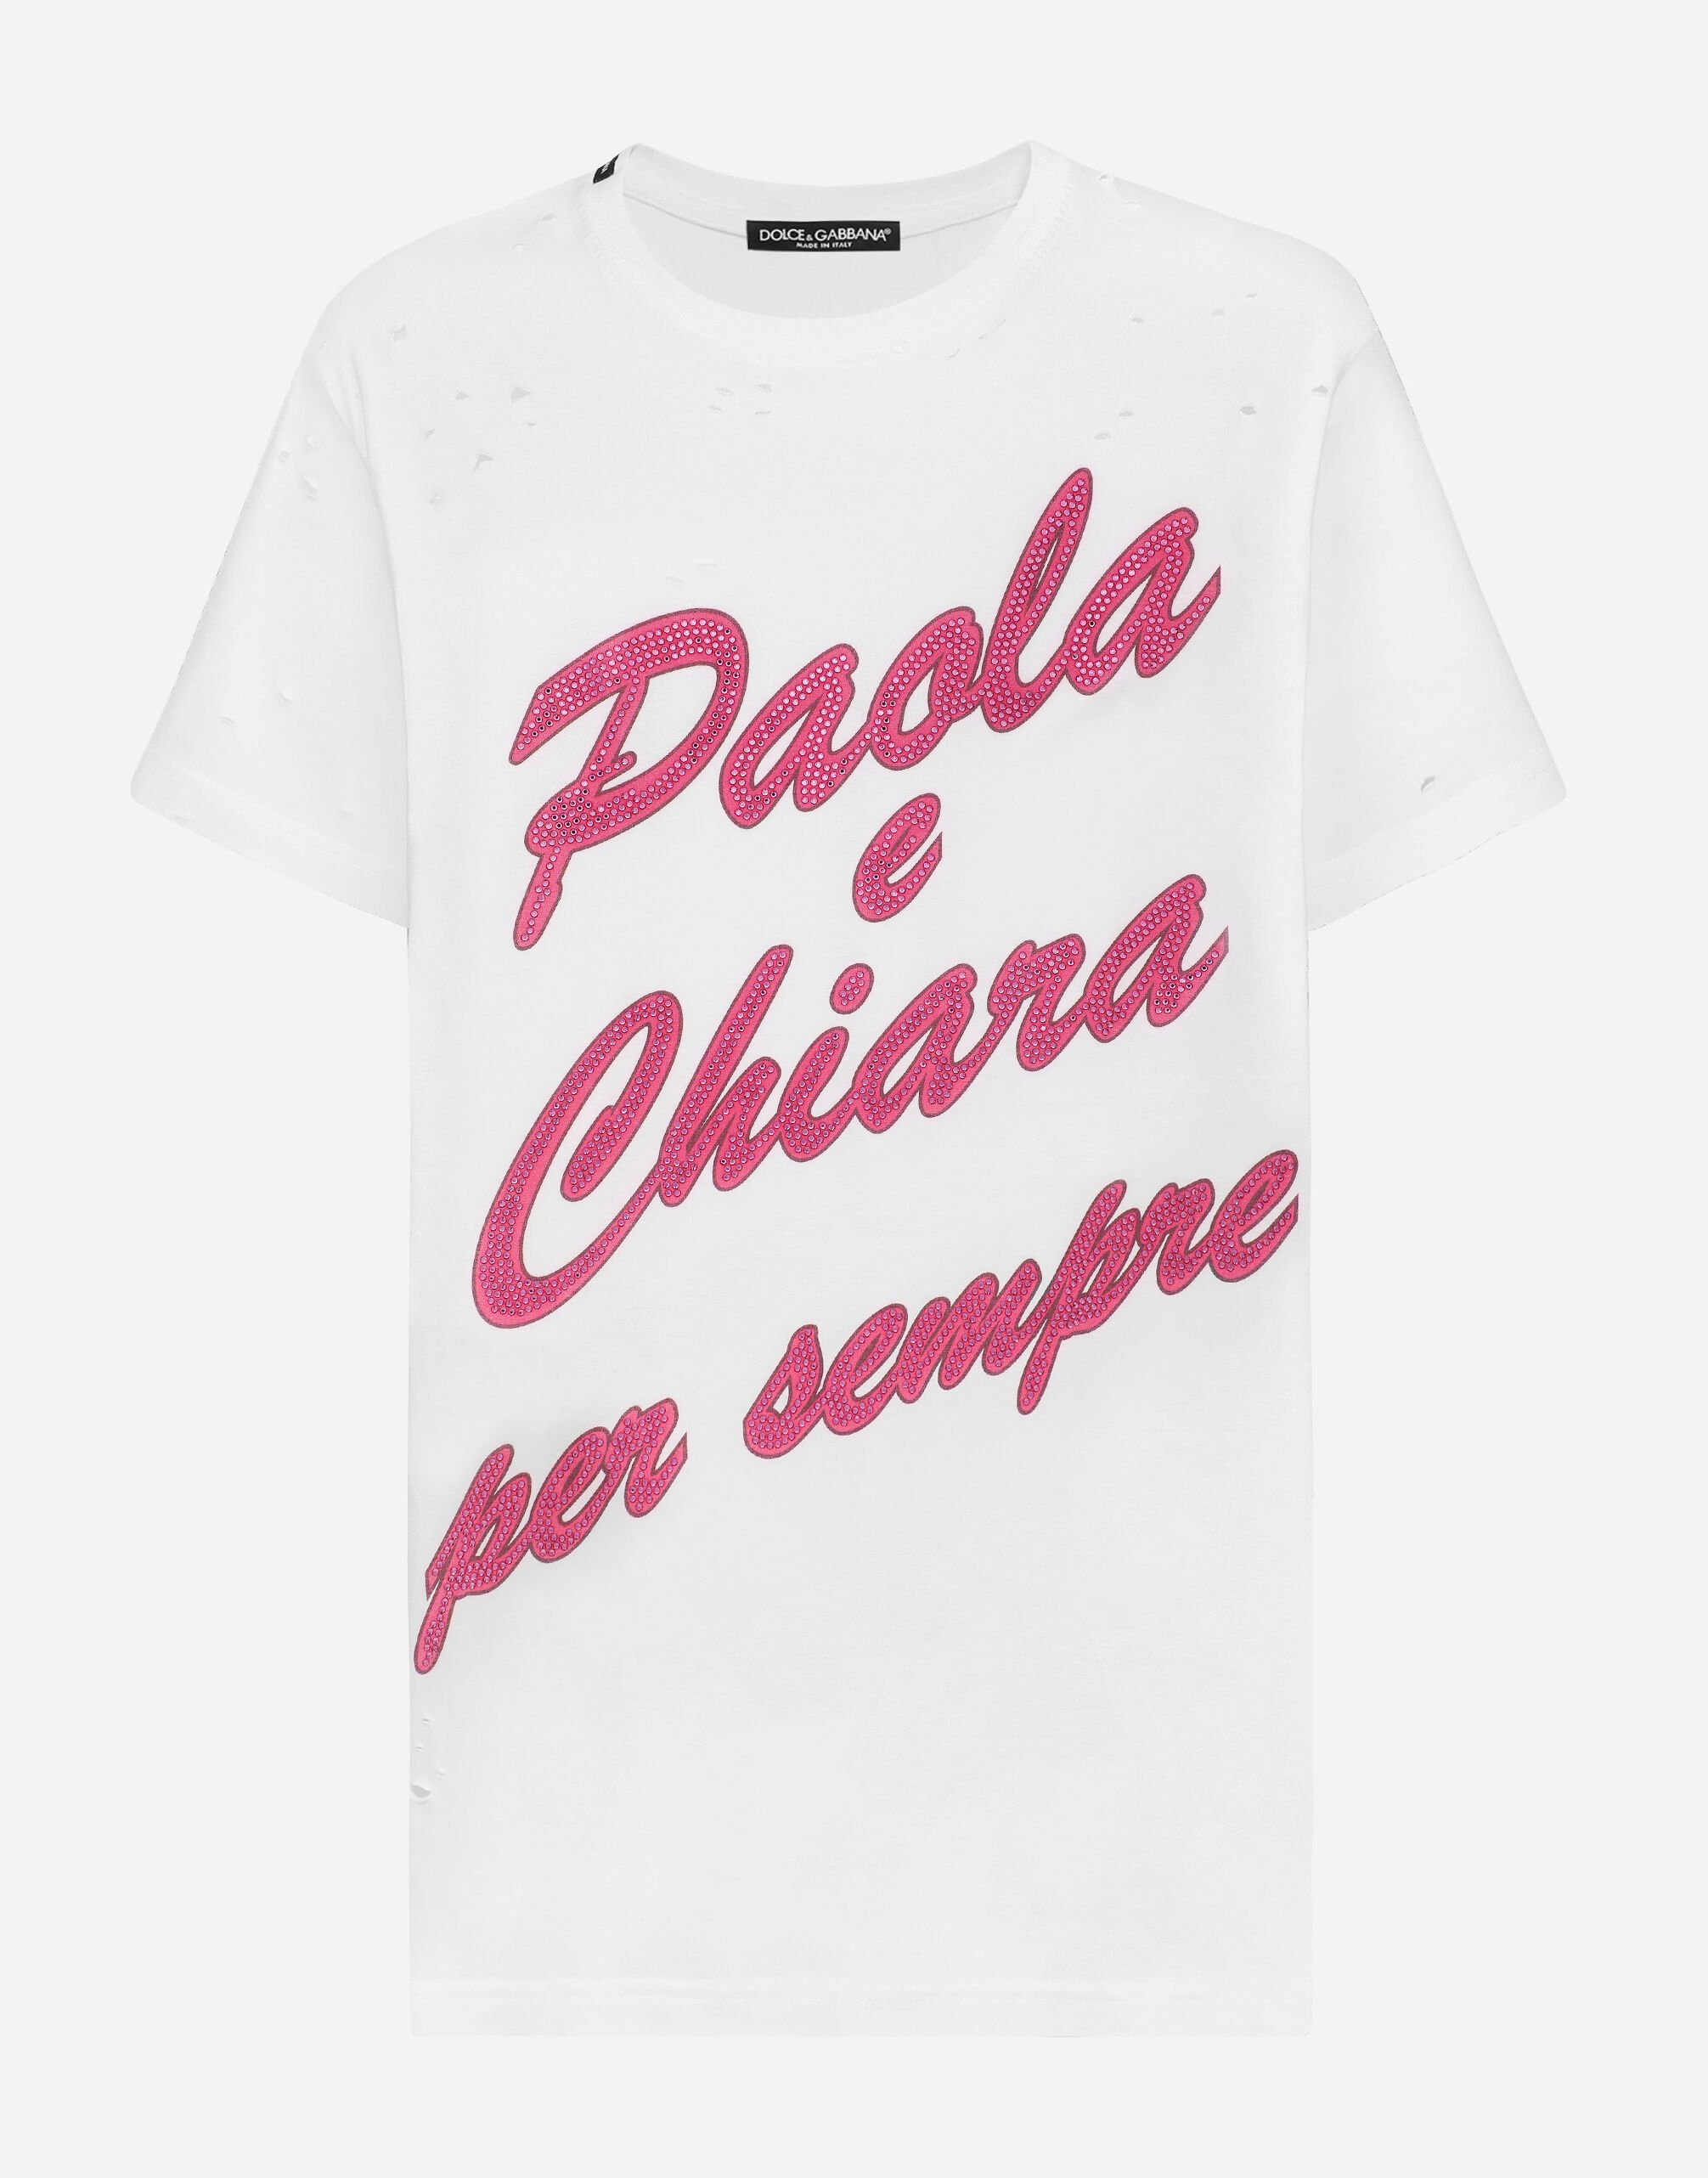 Dolce&Gabbana T-Shirt "Paola e Chiara per sempre" Weiss I8AOHMG7K9Z